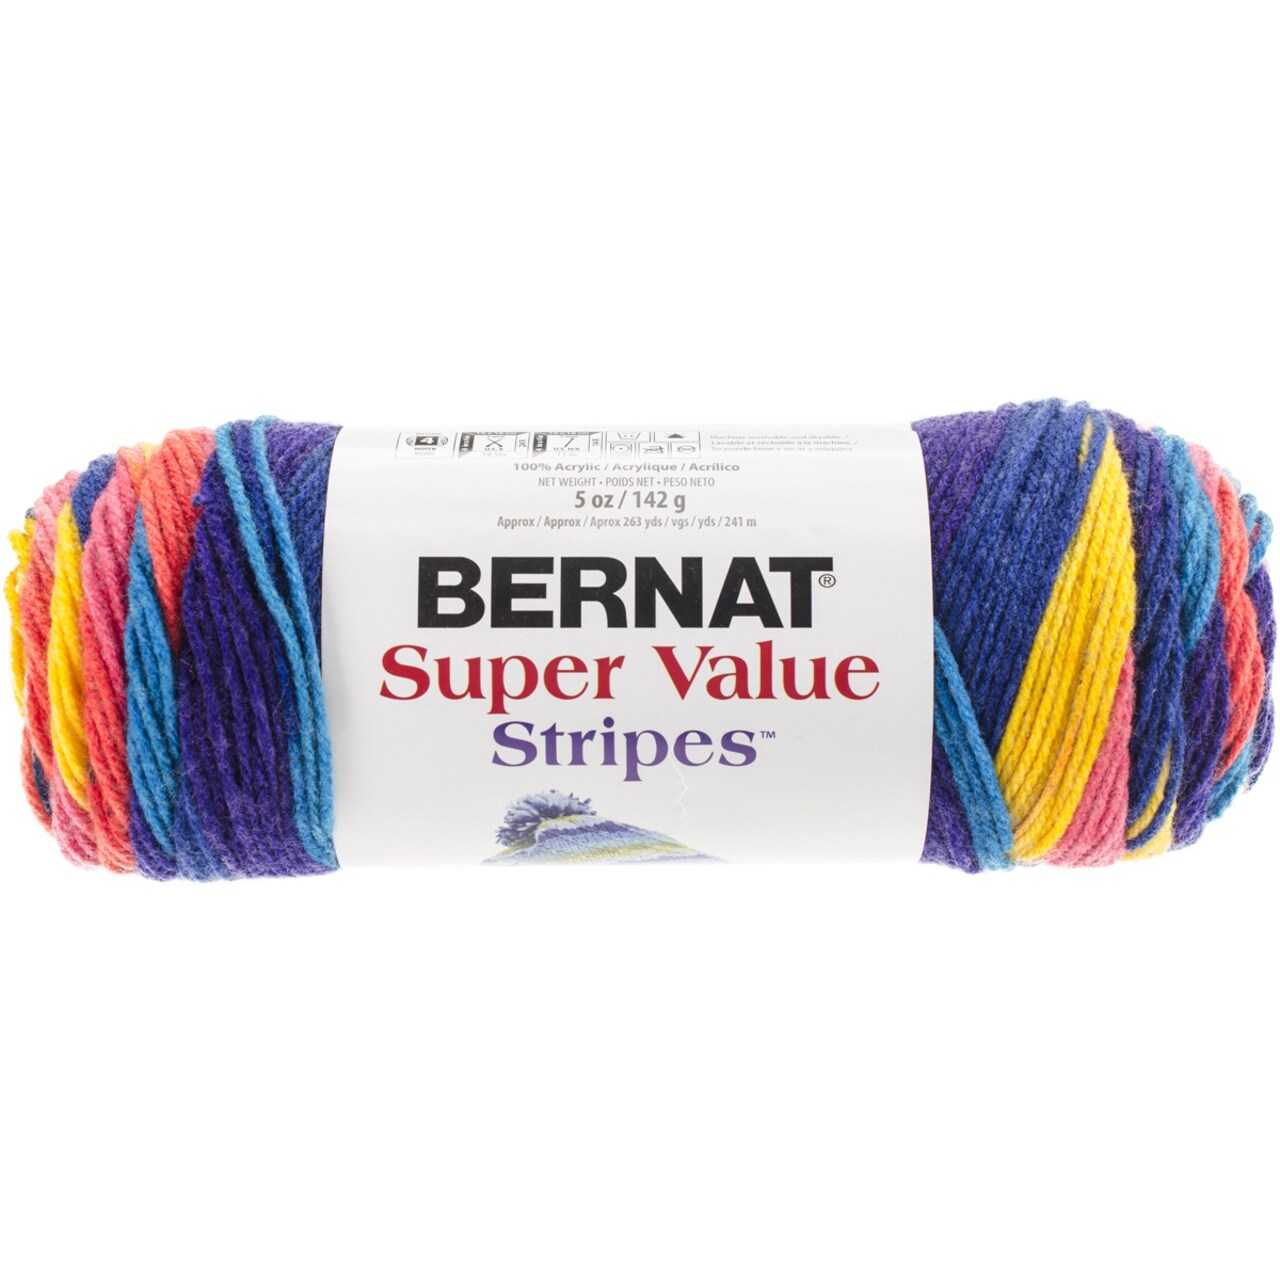 Multipack of 12 - Bernat Super Value Stripes Yarn-Candy Store